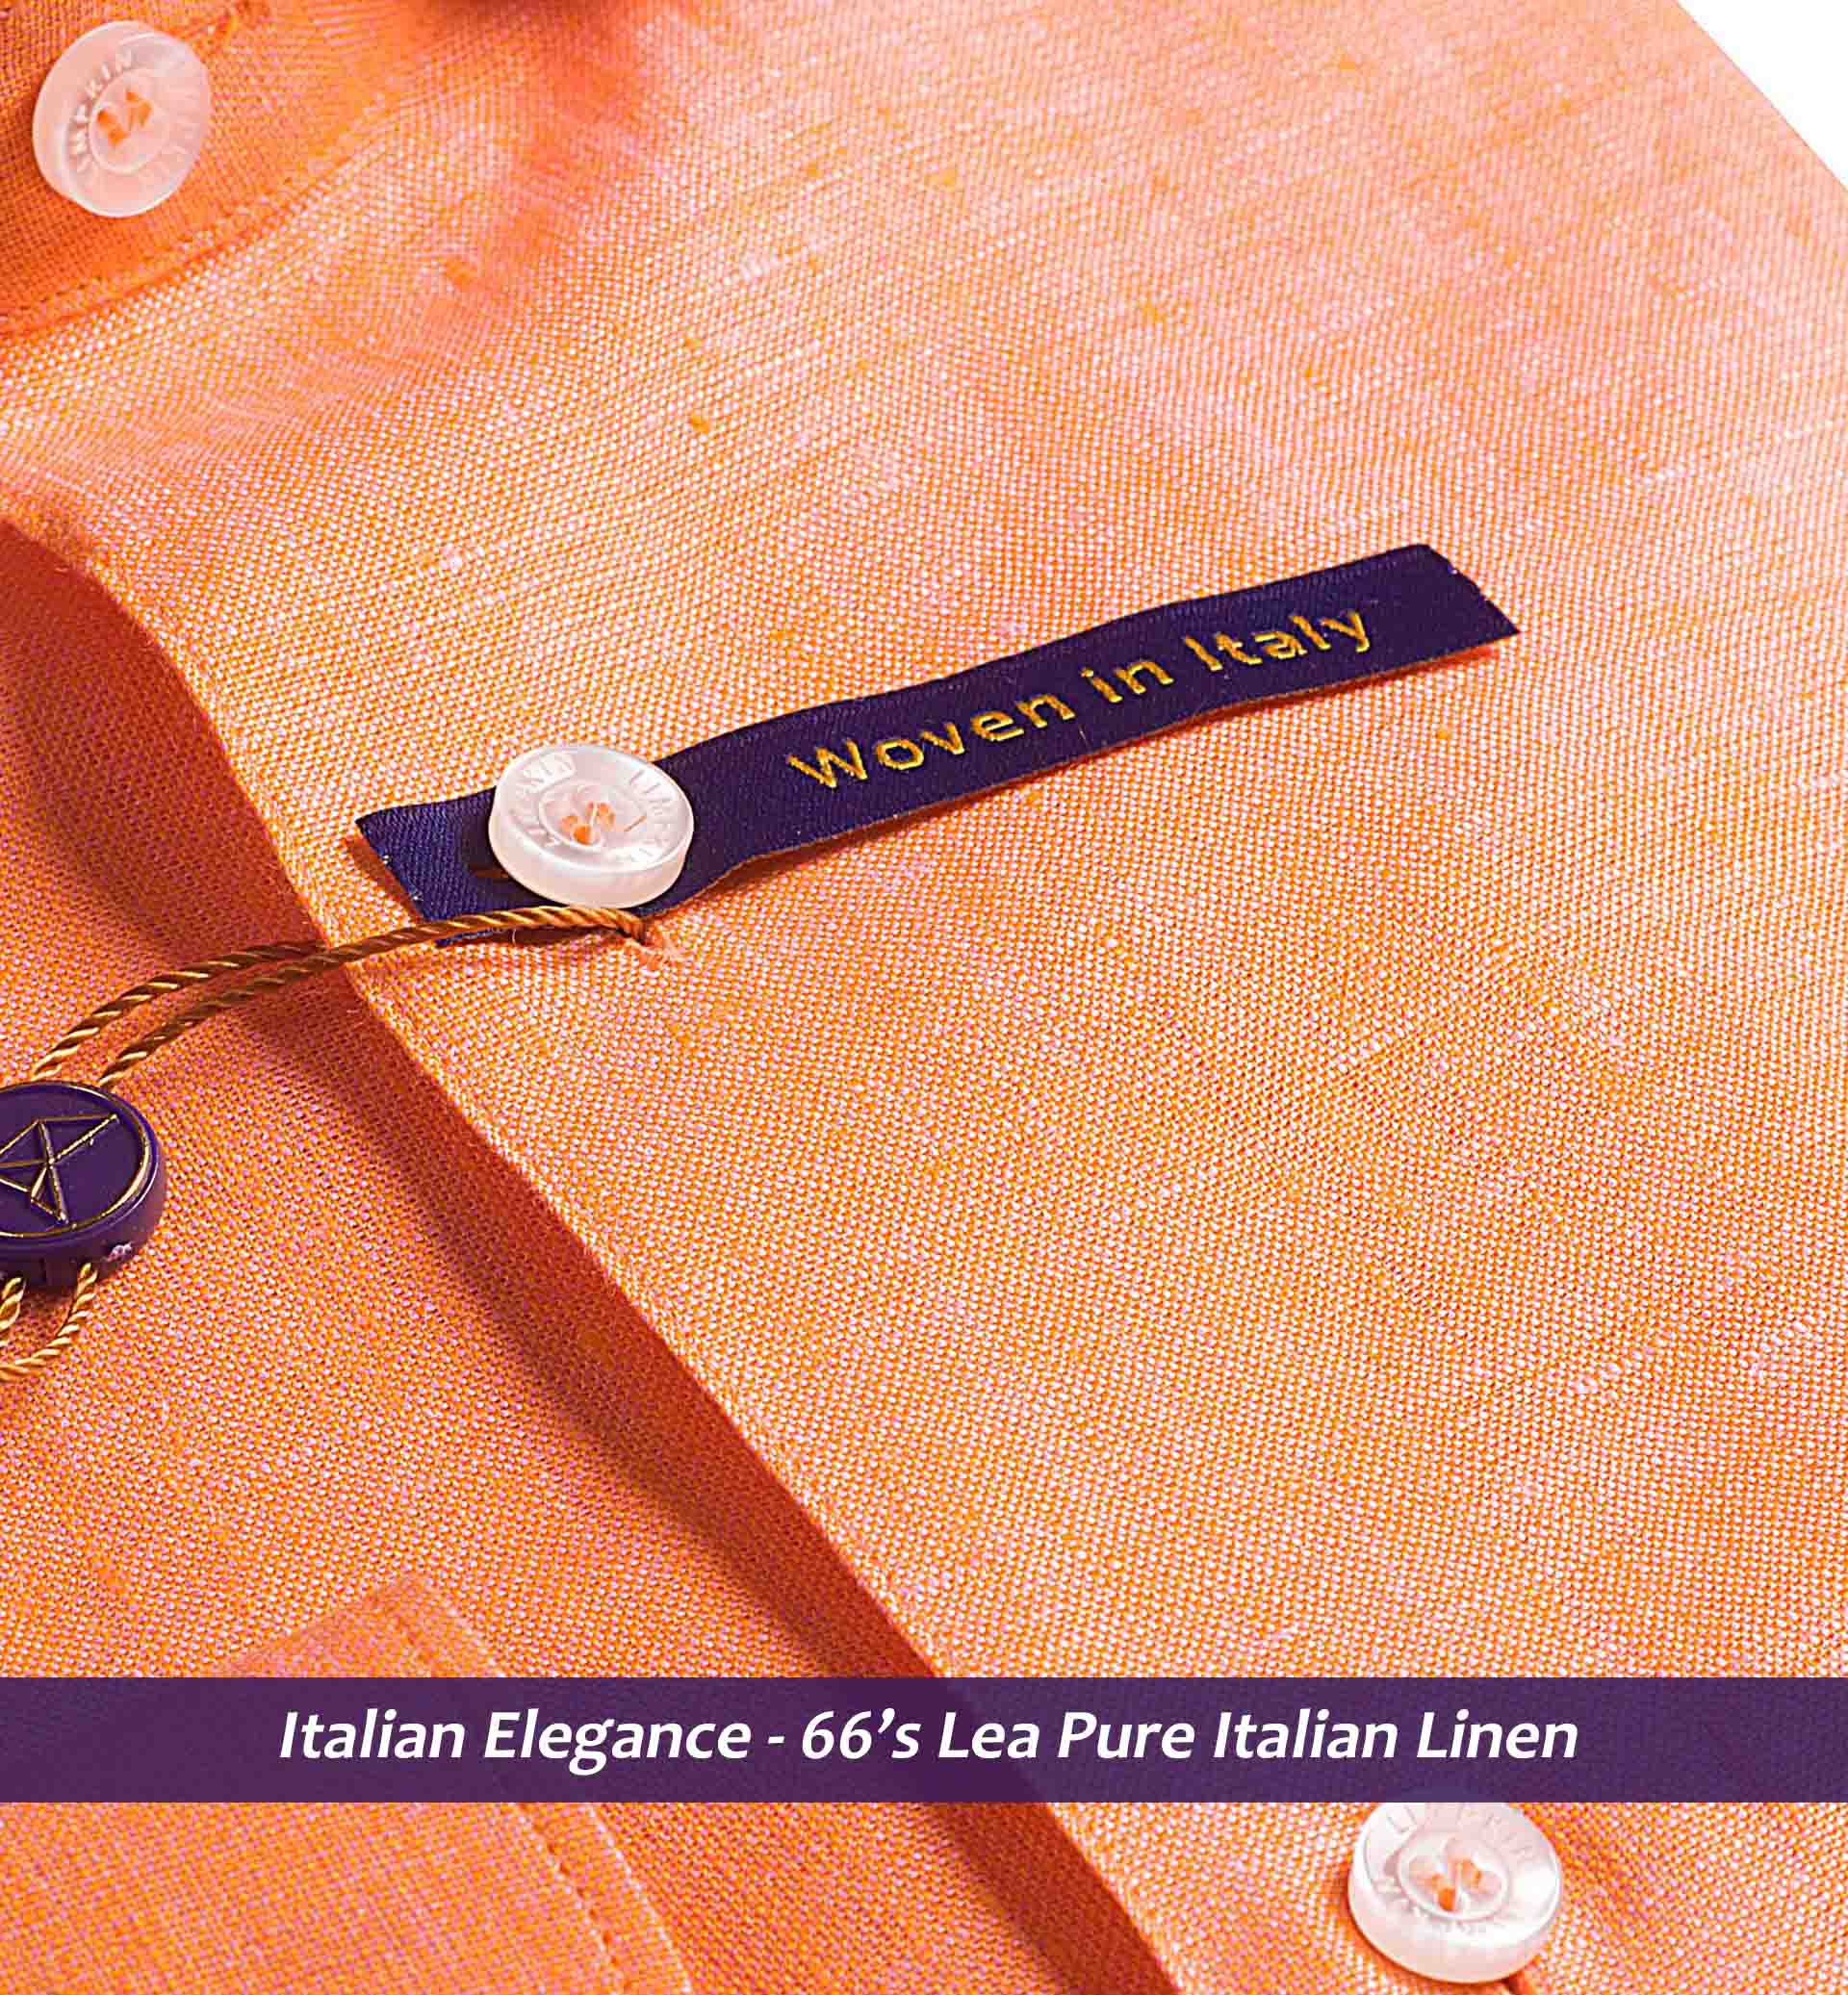 Tangerine Orange Solid Linen- 66's Lea Pure Italian Linen